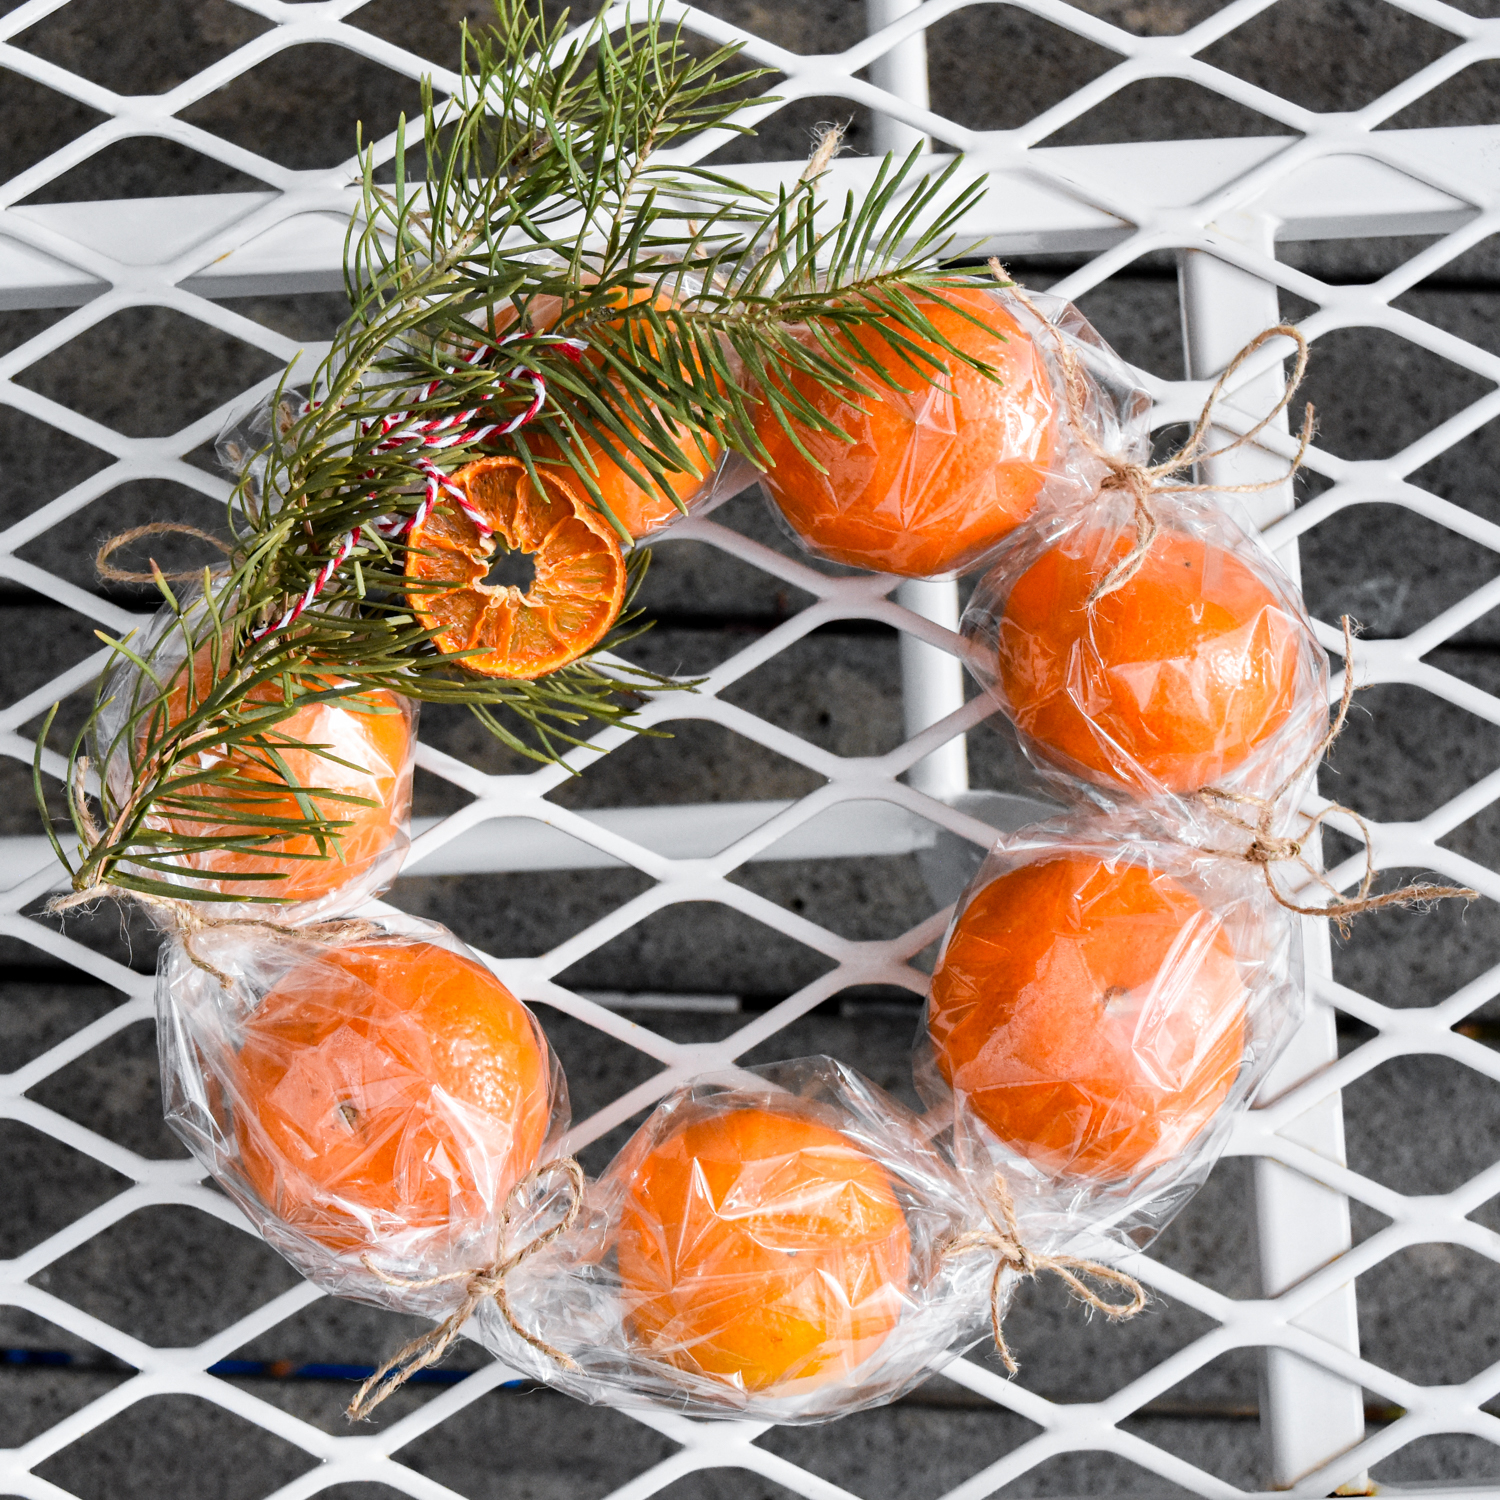 How to Make a Tangerine Wreath